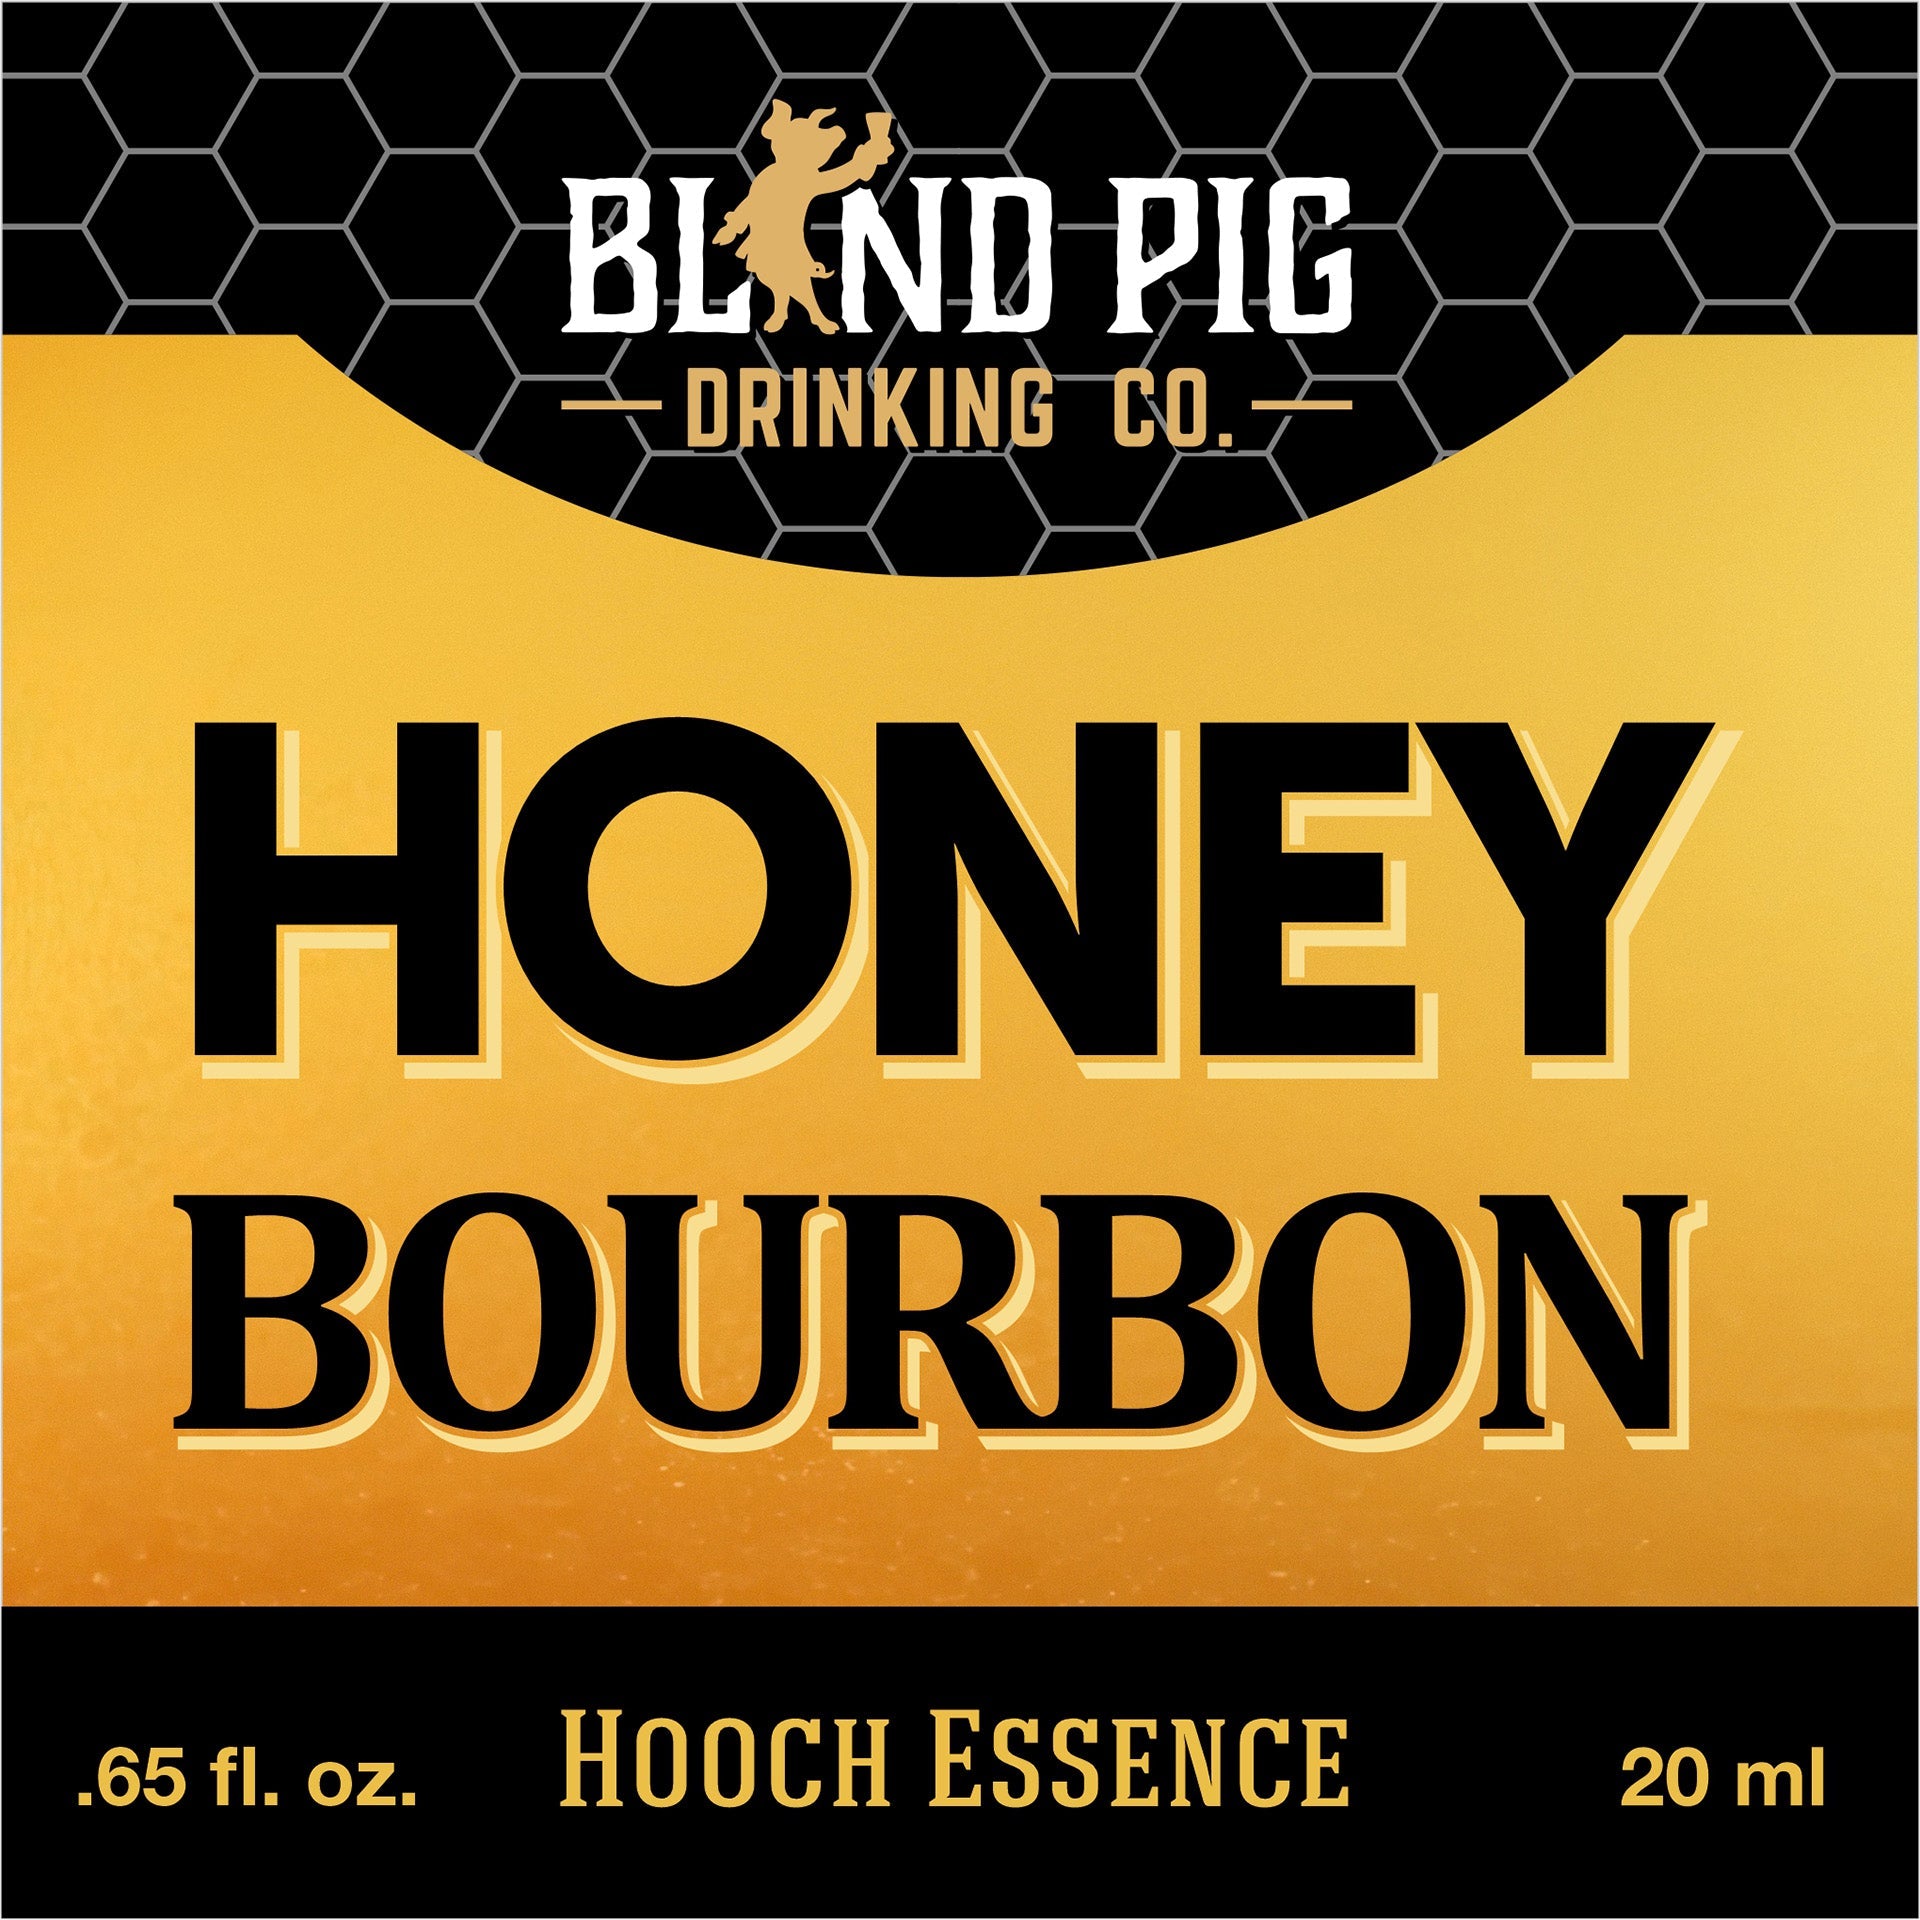 Honey Bourbon Whiskey Hooch Essence | Bourbon Flavor for DIY Spirits - Blind Pig Drinking Co.